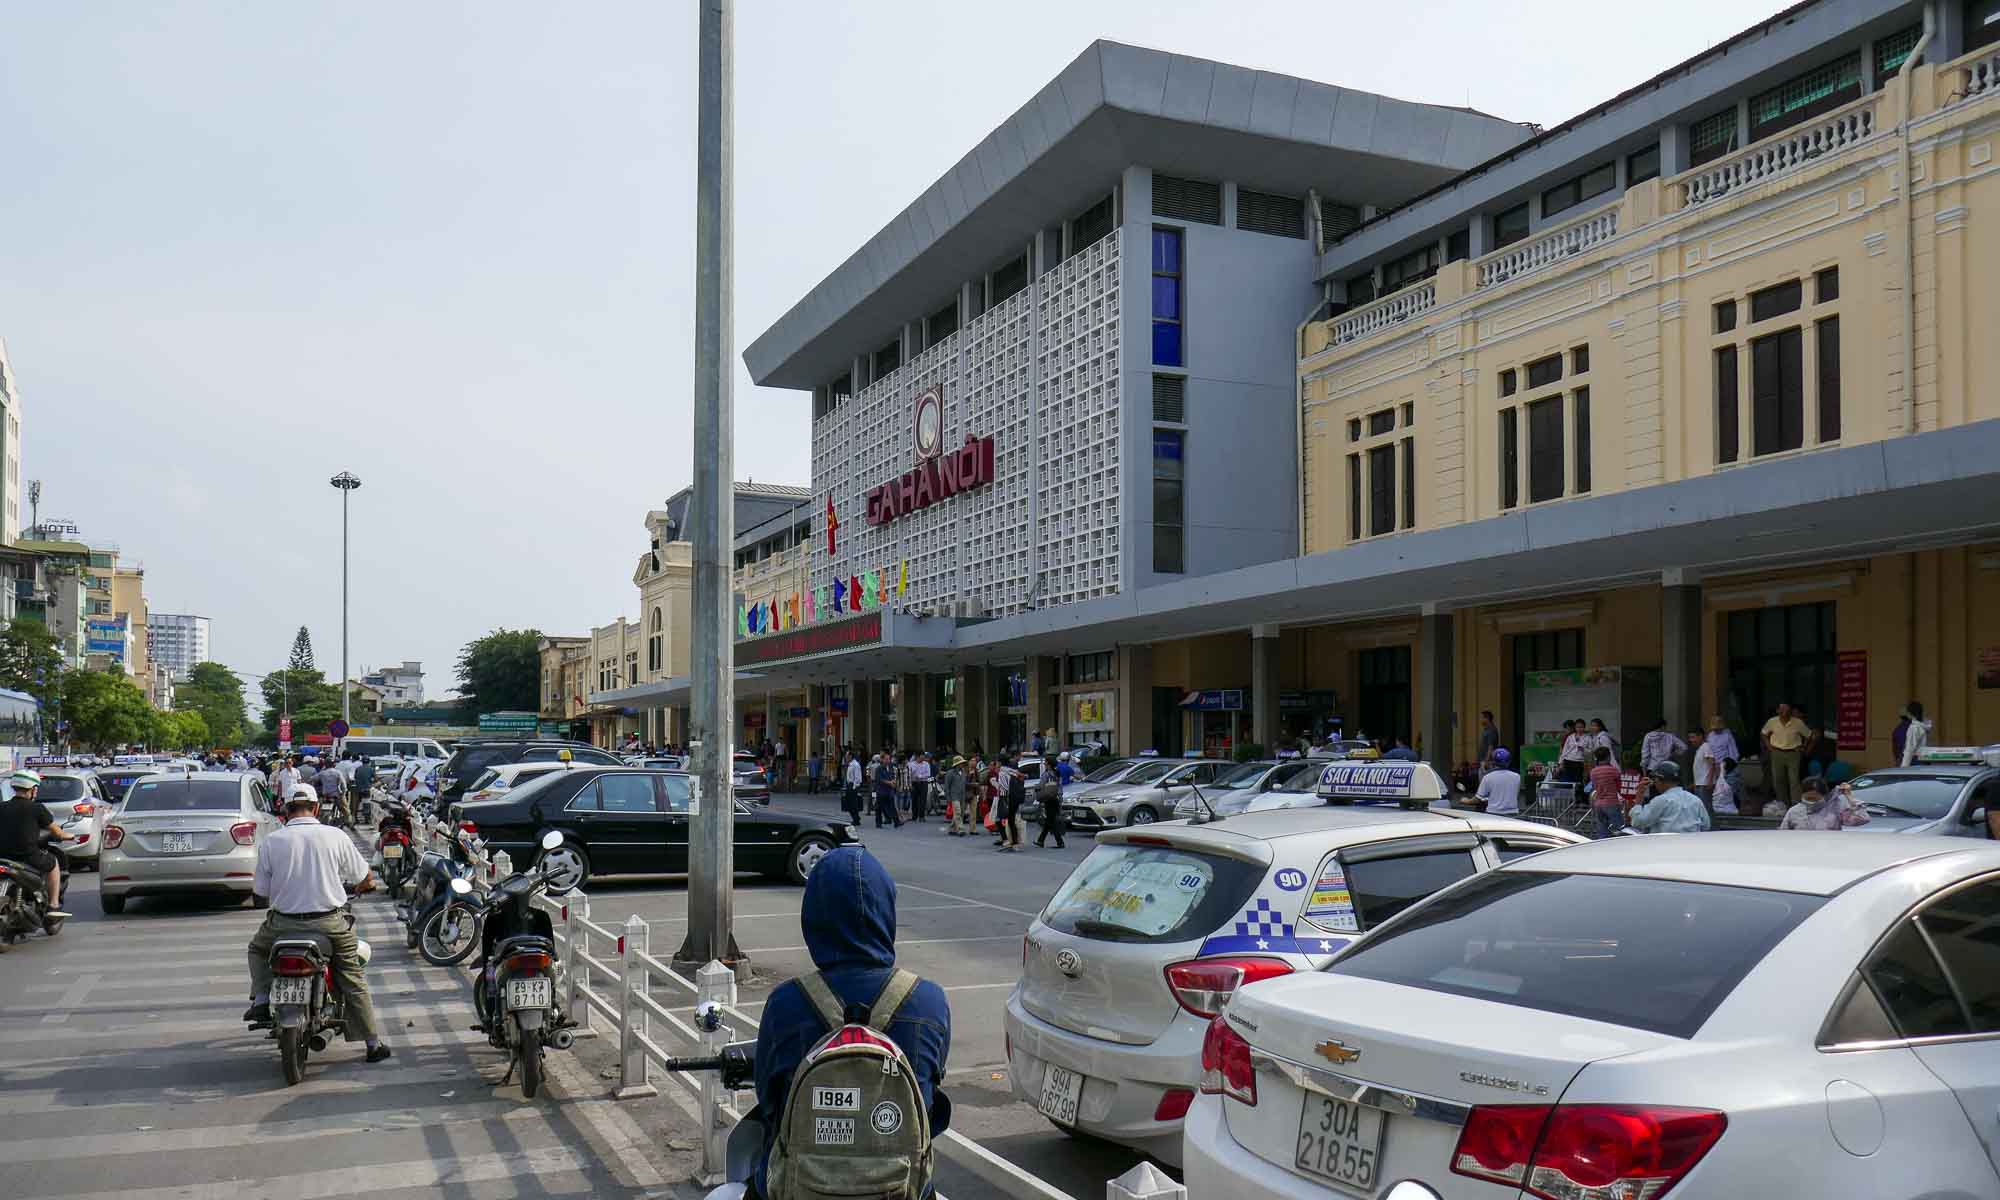 Hanoi station